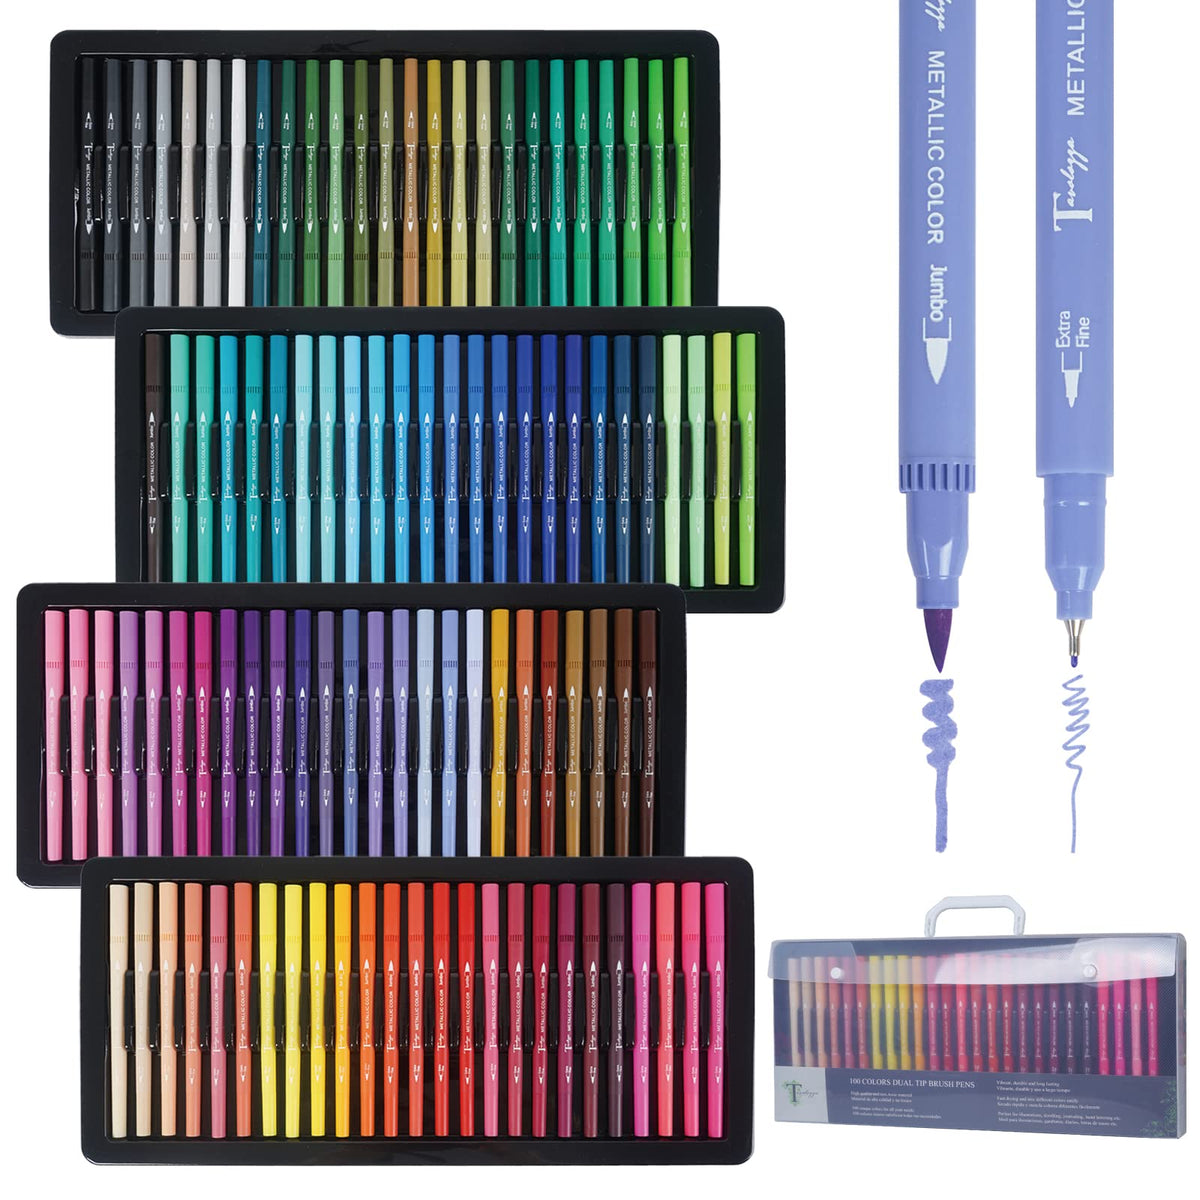 Dual Tip Brush Pen,120 Colored Dual Tip Markers Calligraphy Pens, Dual —  CHIMIYA